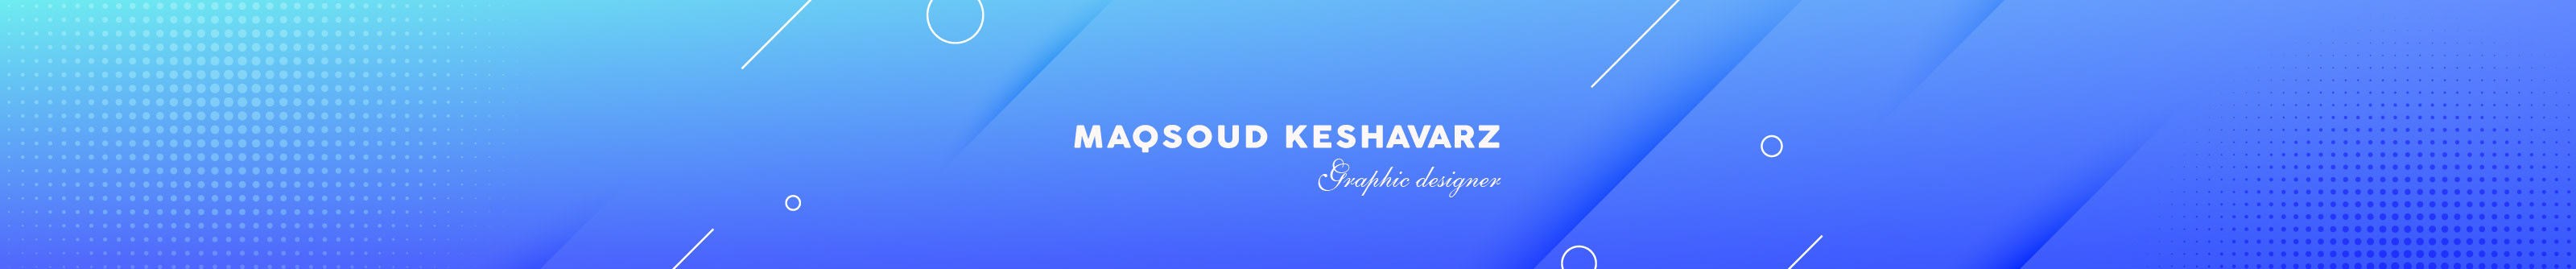 Maqsoud Keshavarz's profile banner